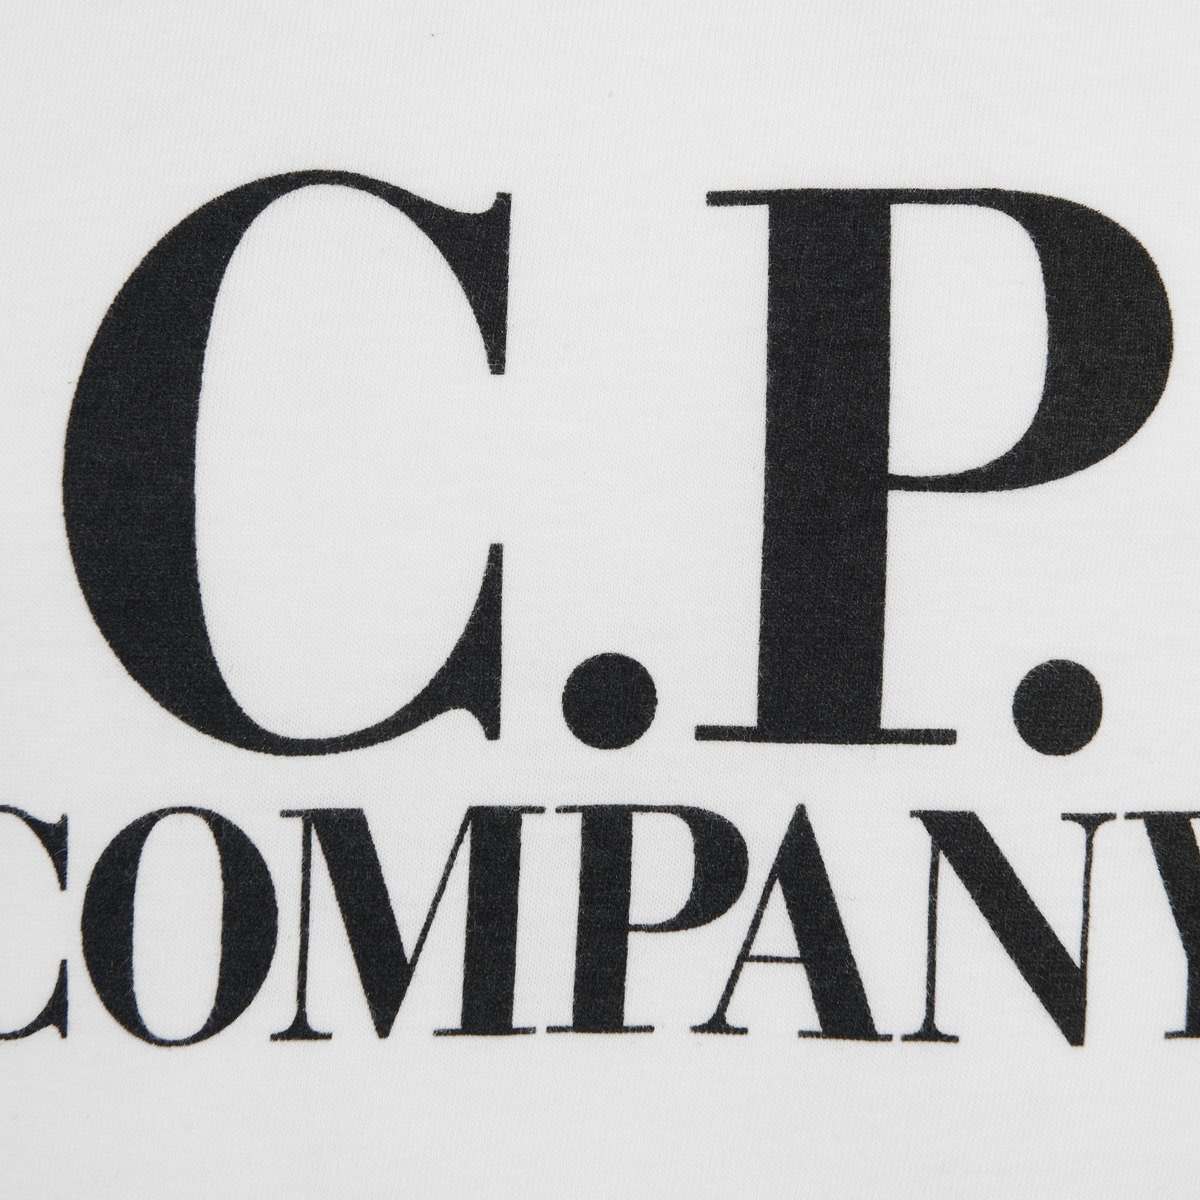 Company White Logo - C.P. Company Boys White Logo Top